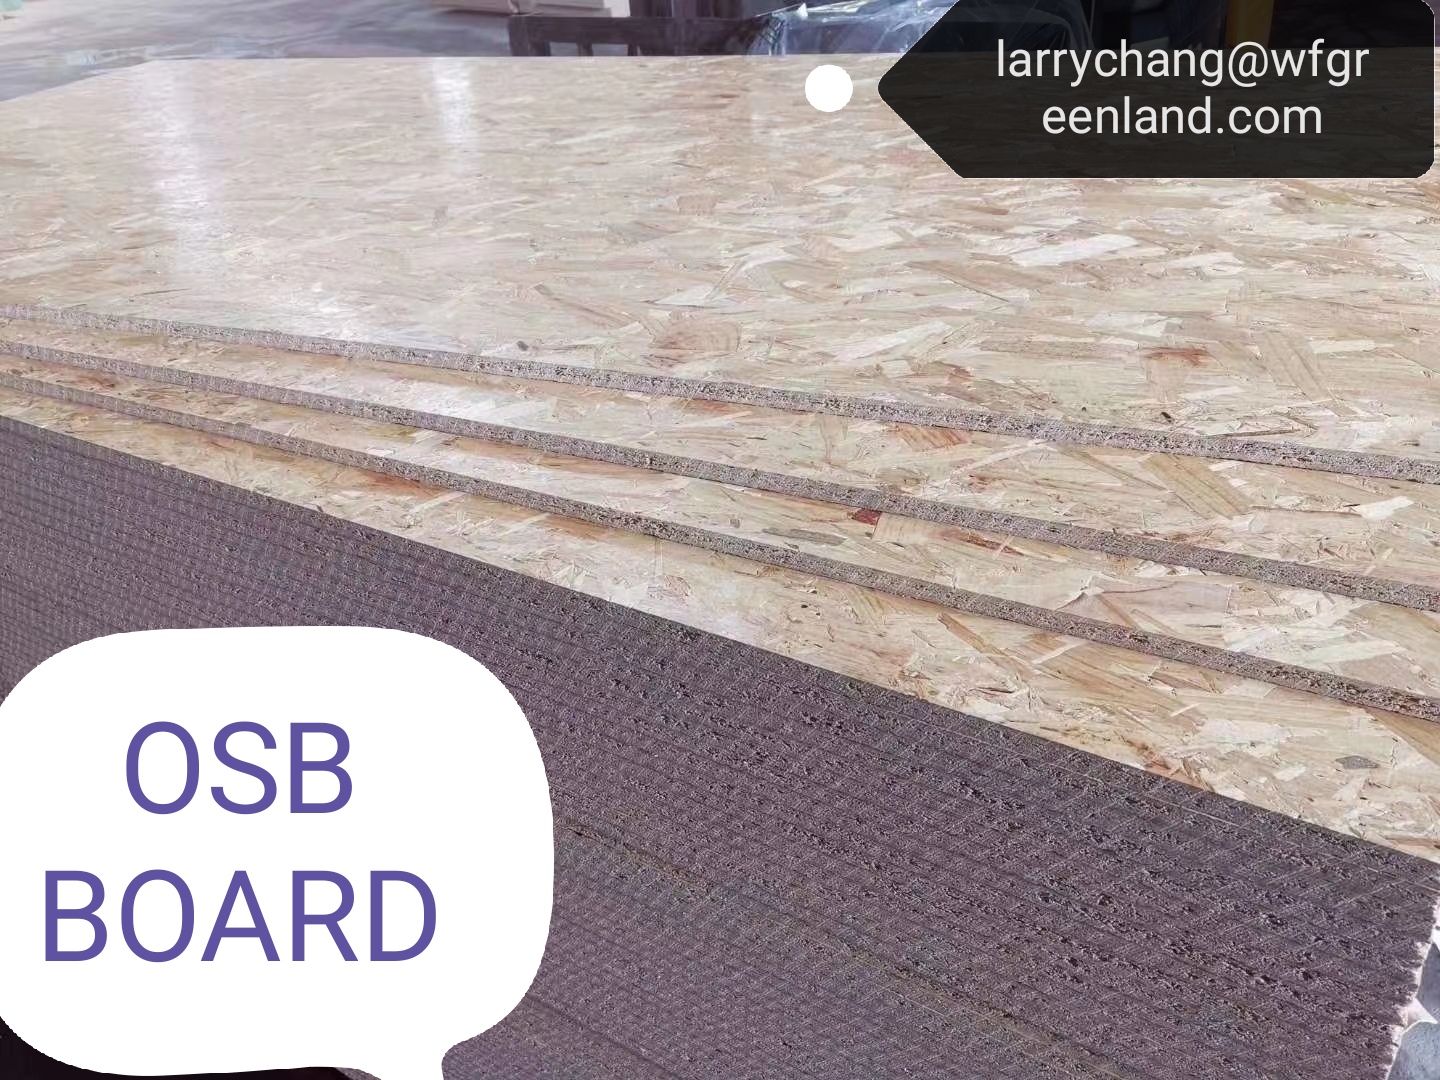 OSB (oriented stand board) Board